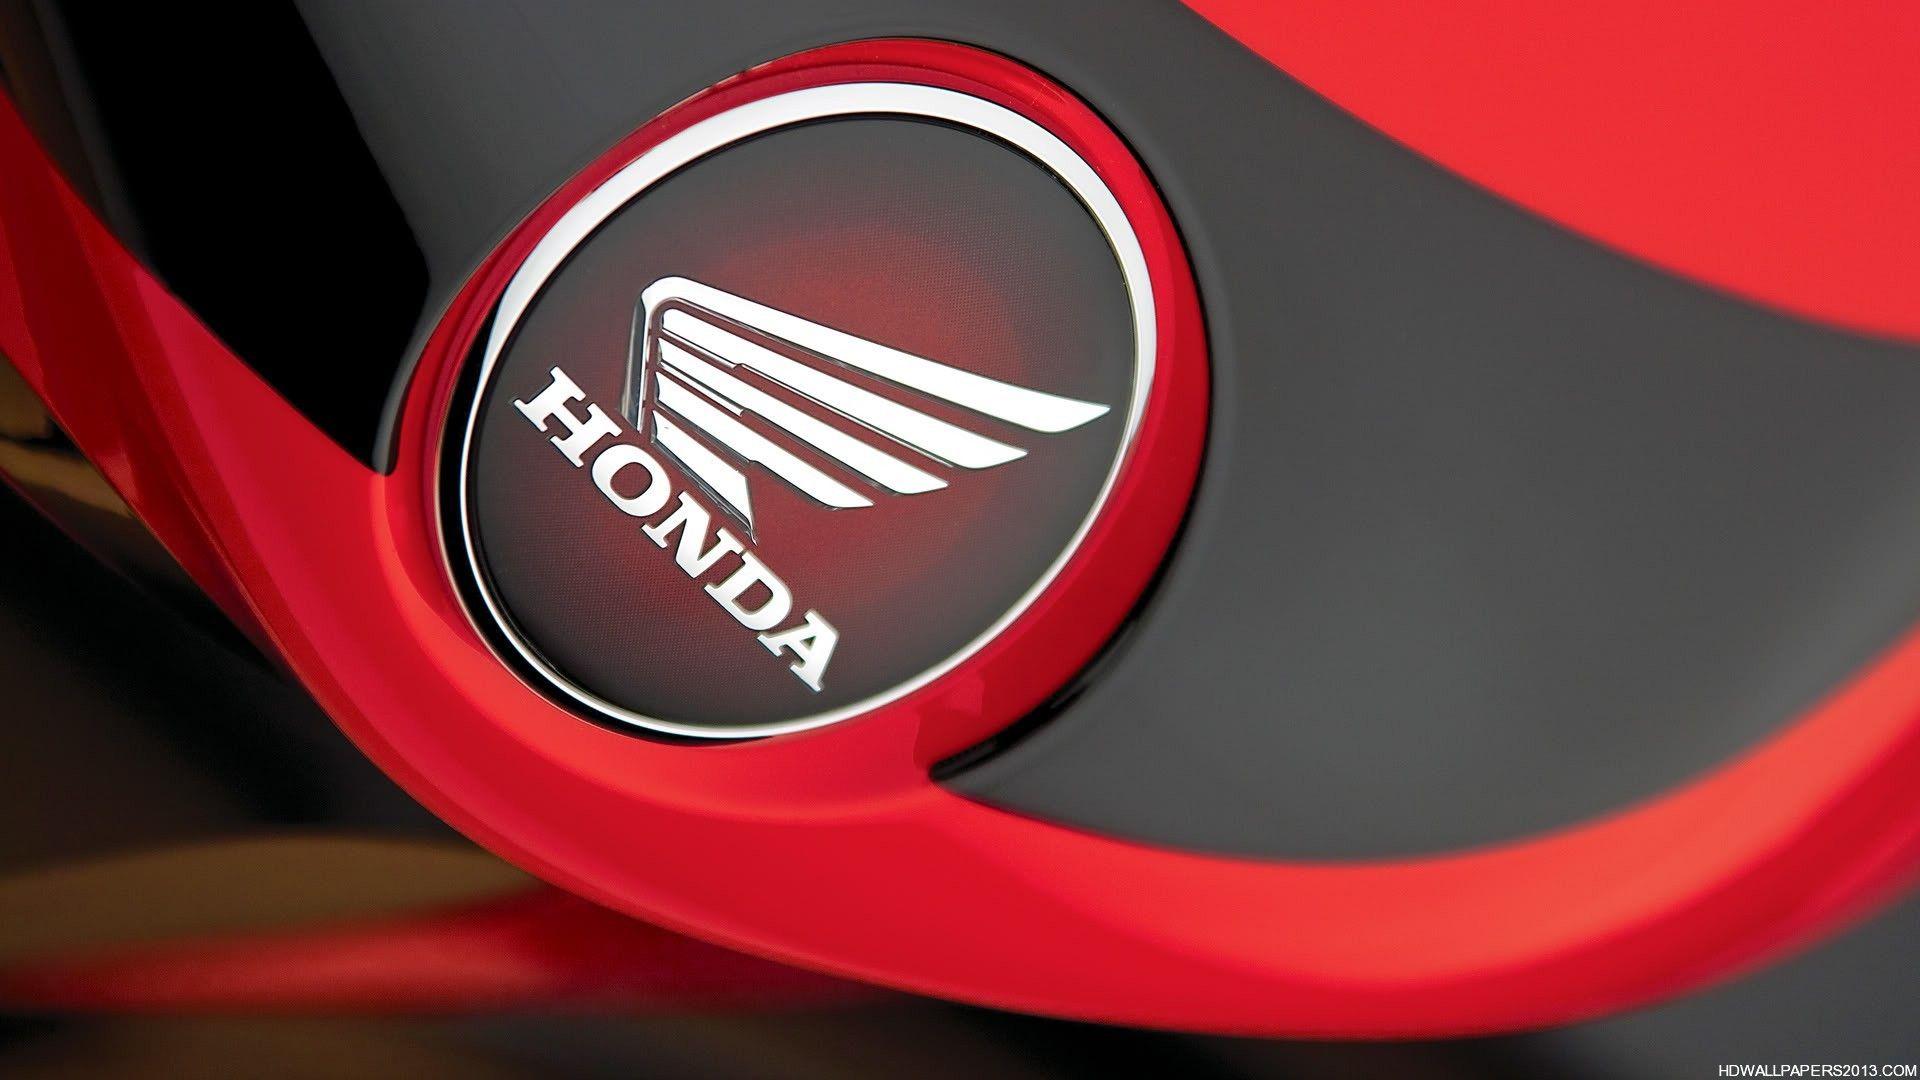 Honda Logo Wallpaper. High Definition Wallpaper, High Definition